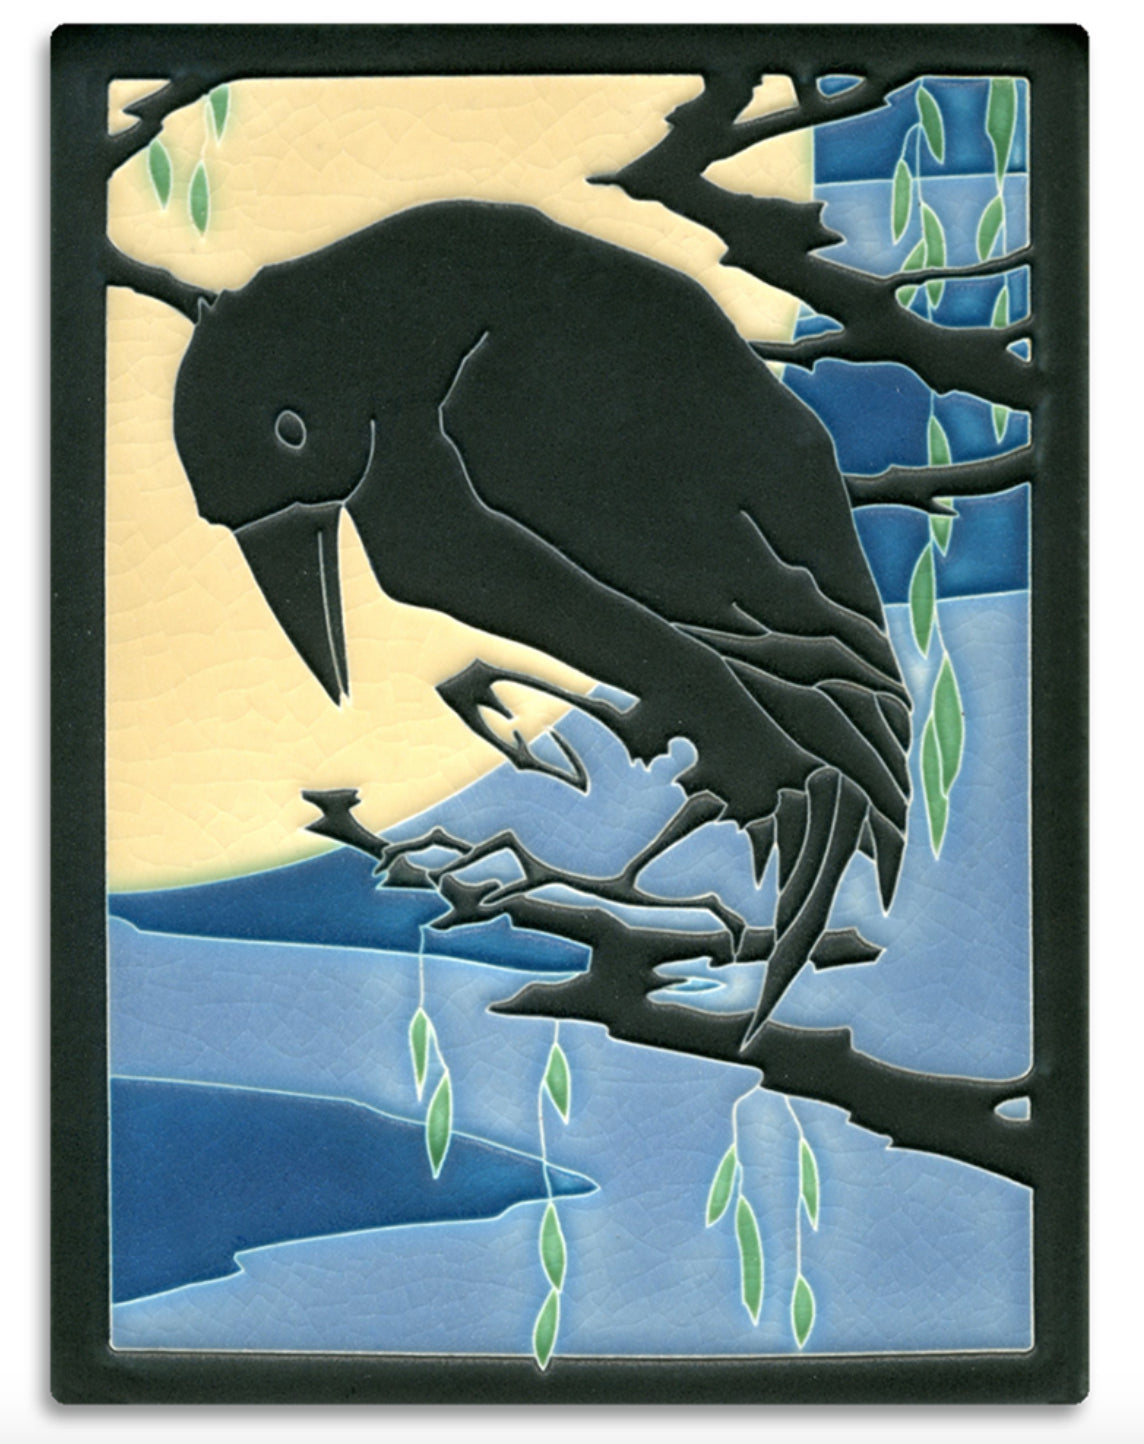 Raven – 8 x 8 art tile